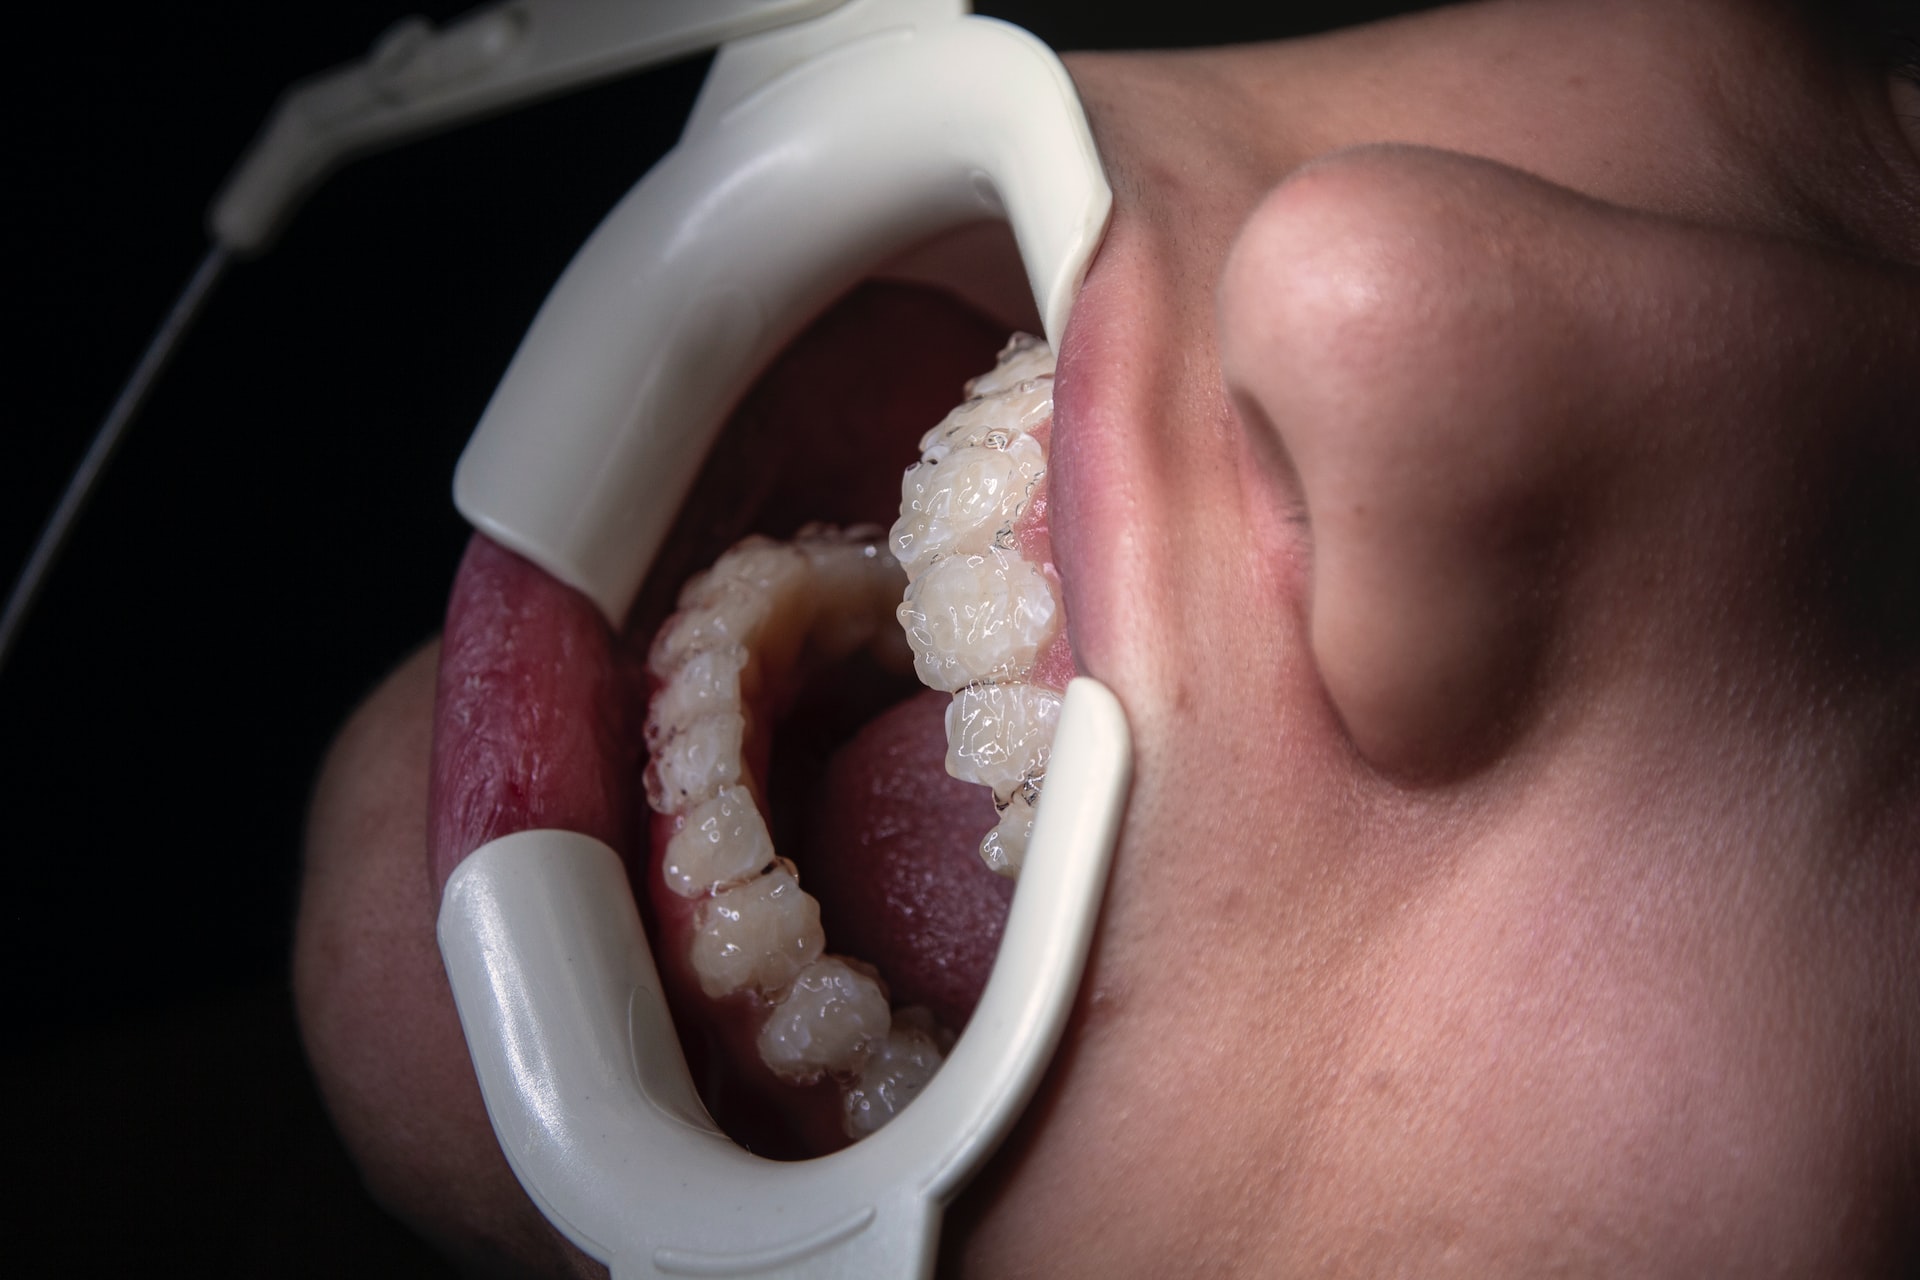 teeth whitening treatment